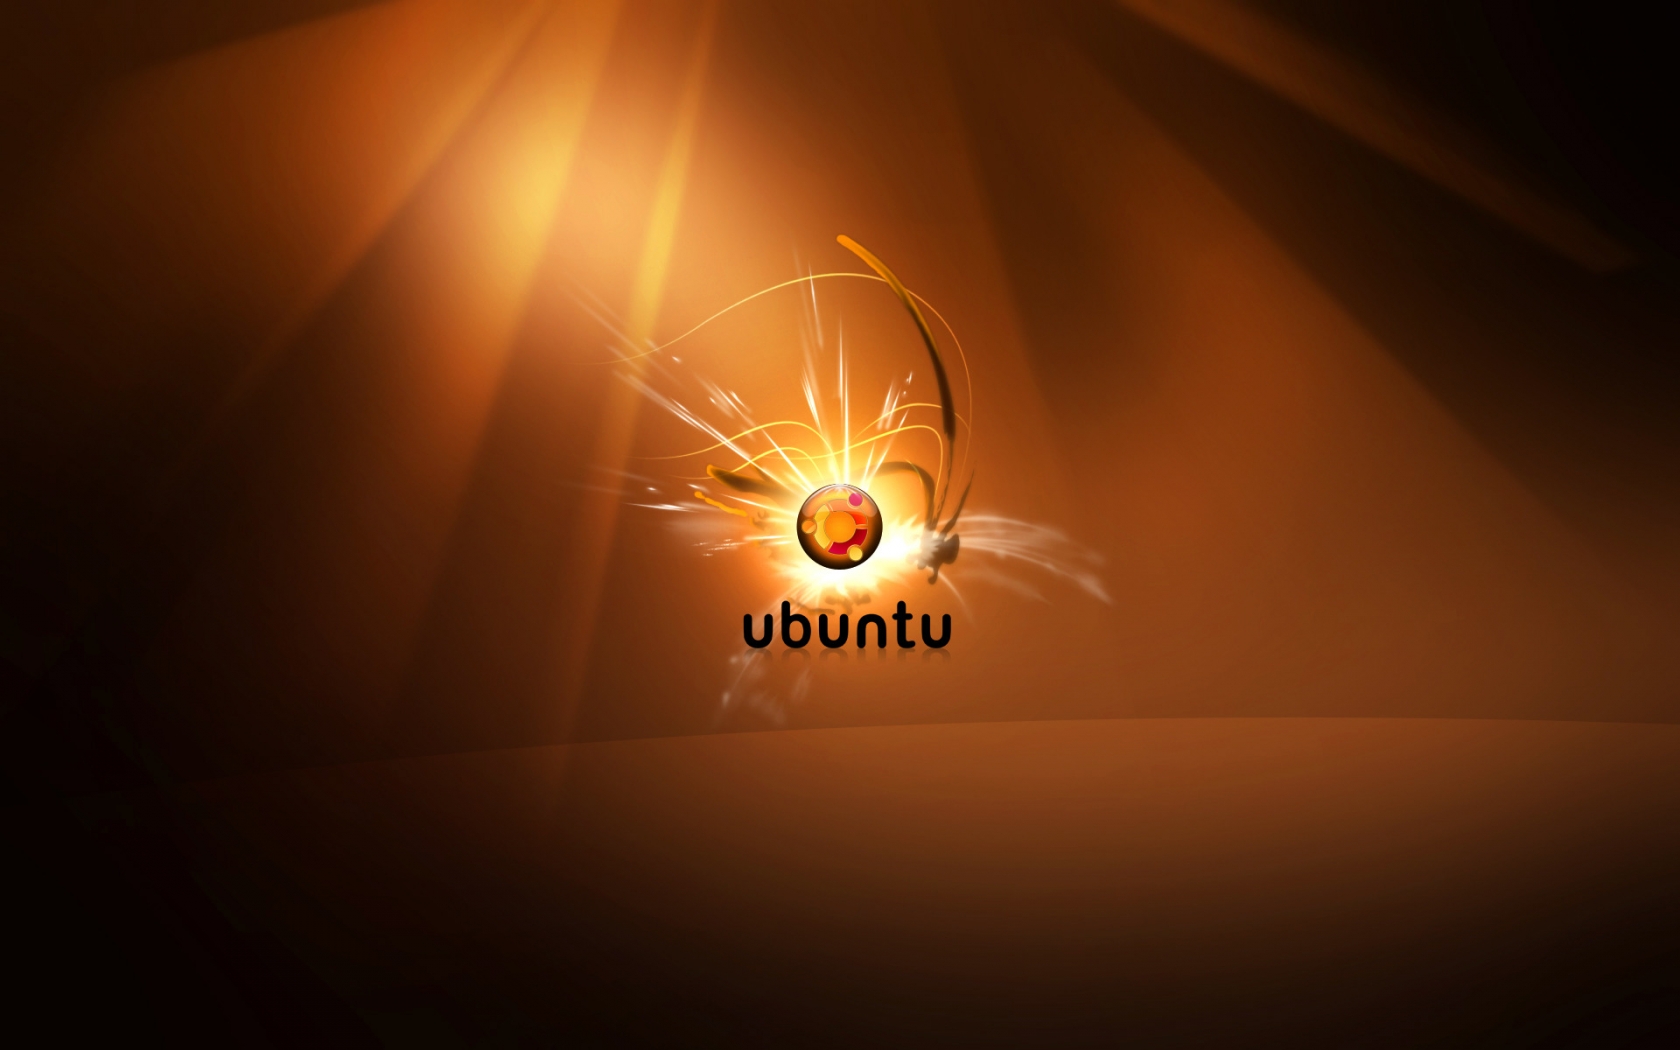 Creative Ubuntu Design for 1680 x 1050 widescreen resolution